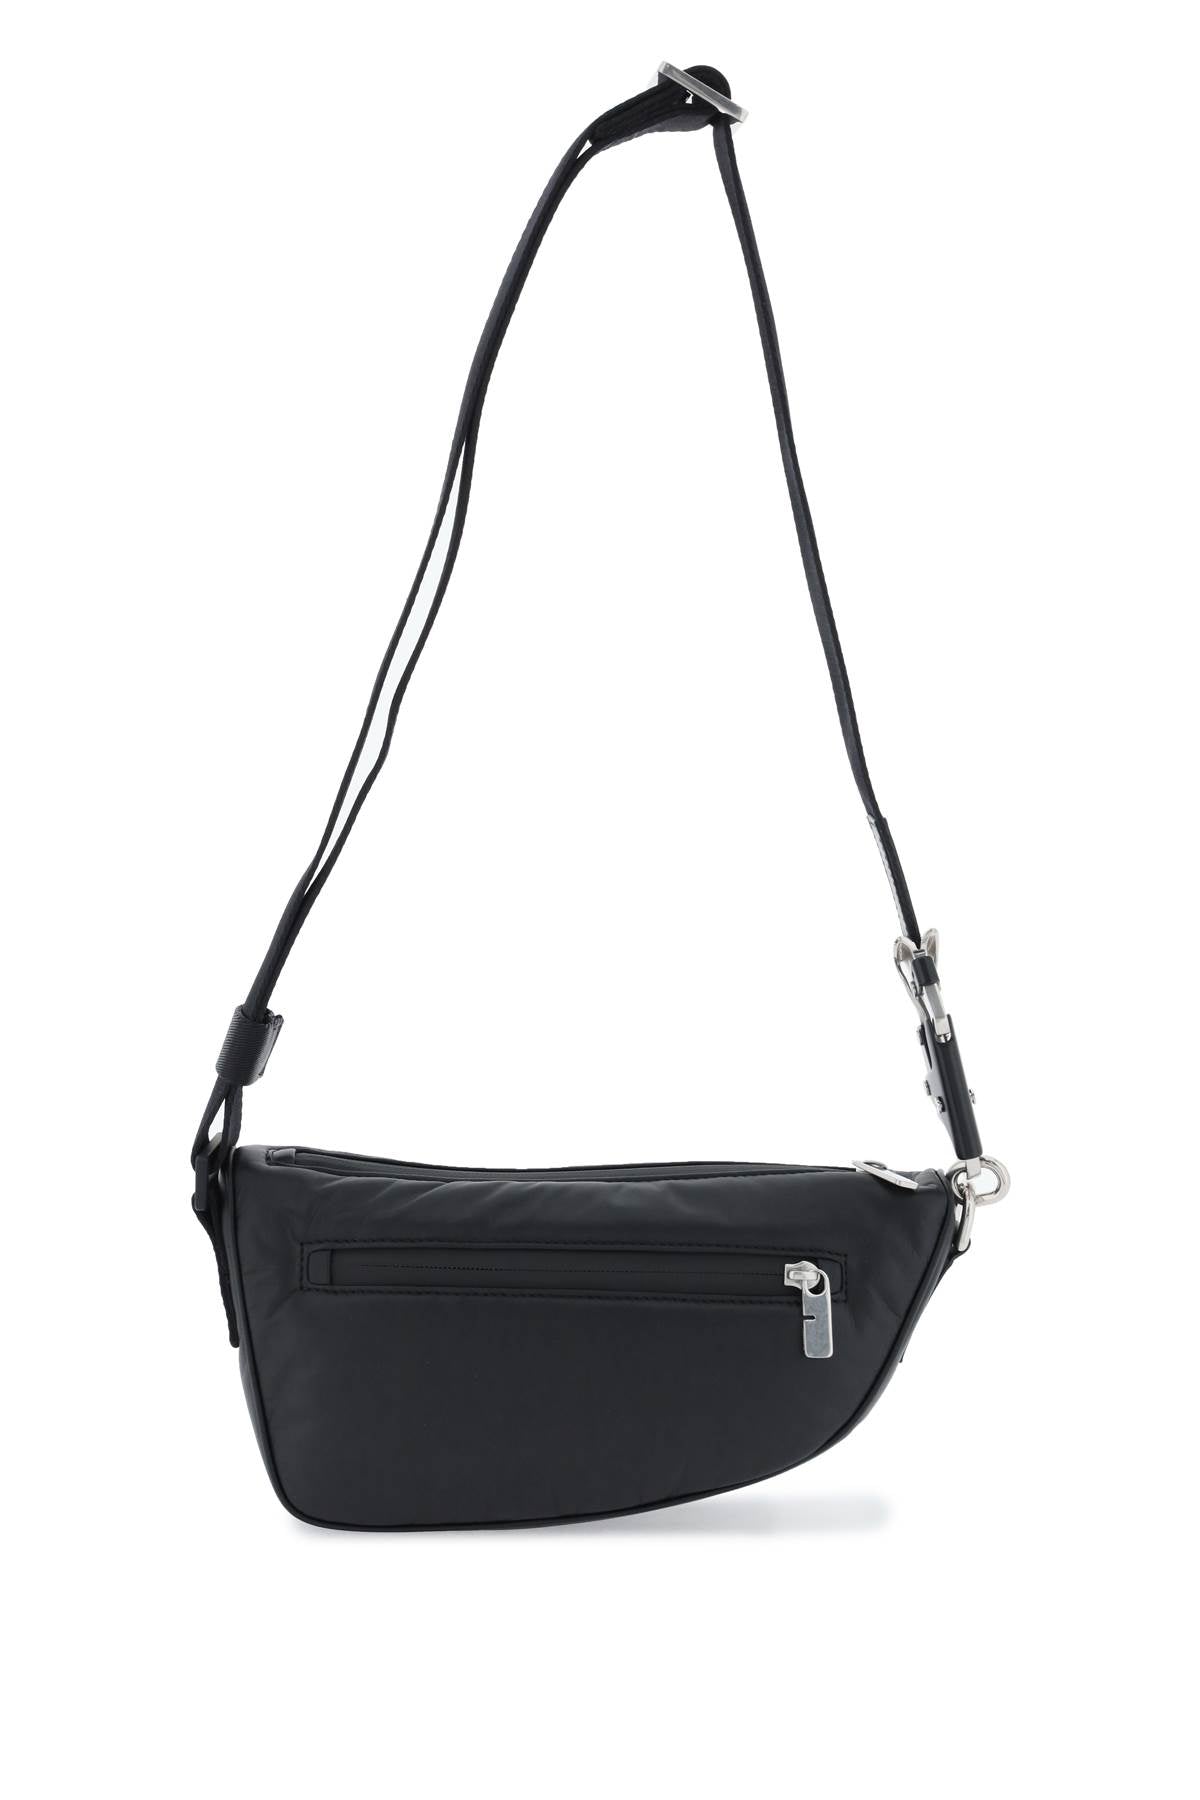 BURBERRY Black Shield Crossbody Handbag for Women